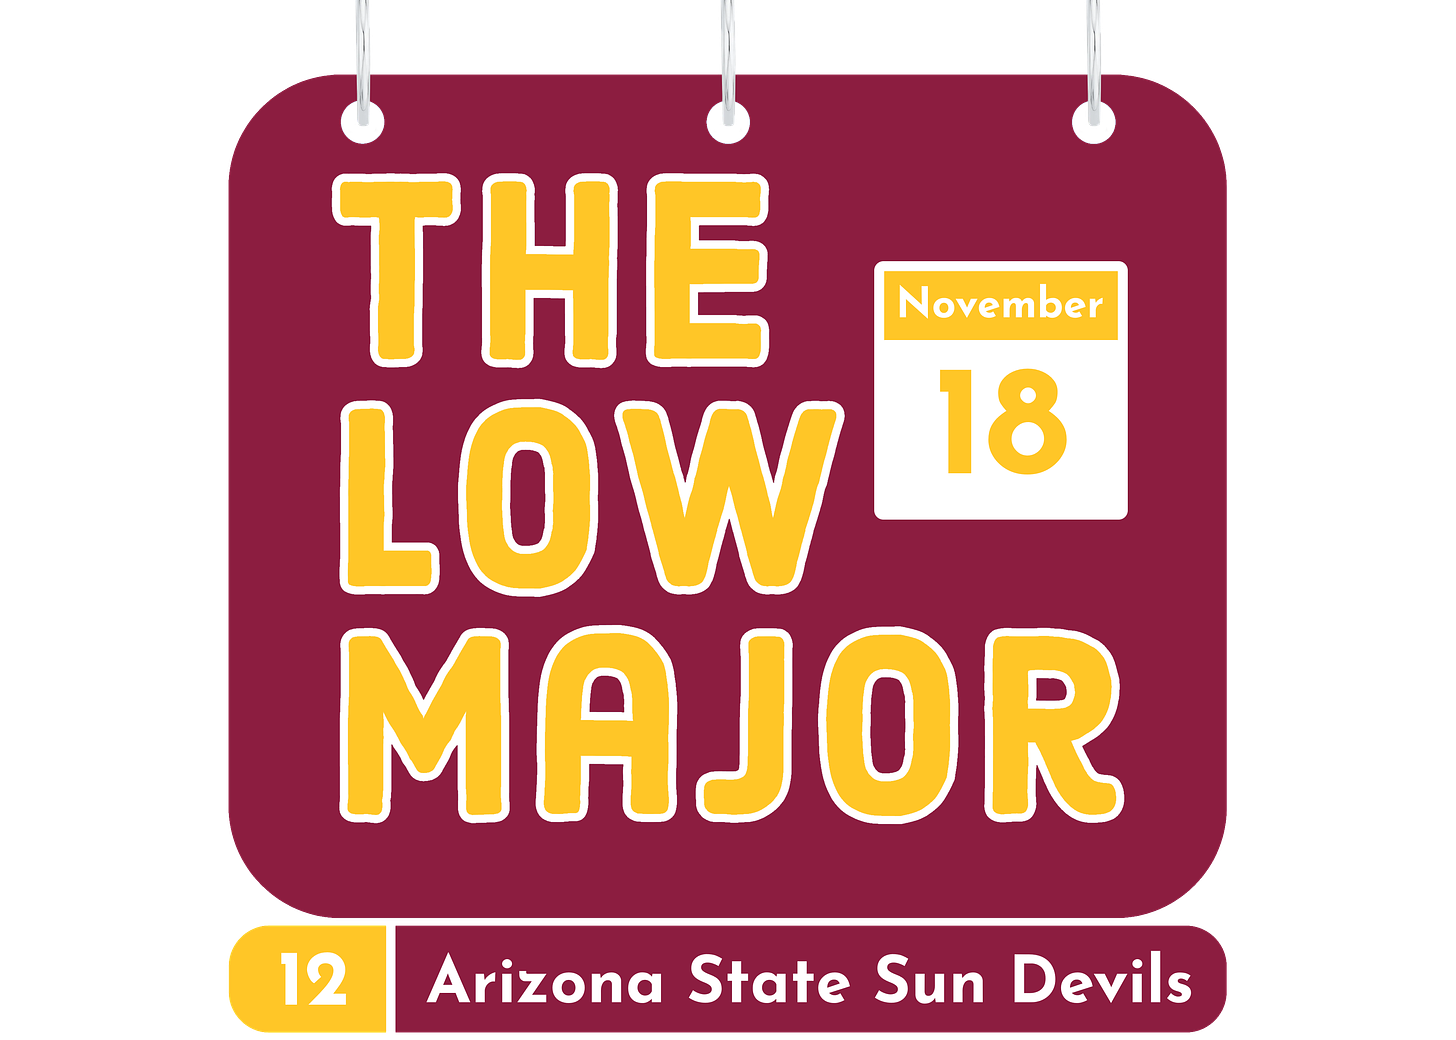 Name-a-Day Arizona State logo